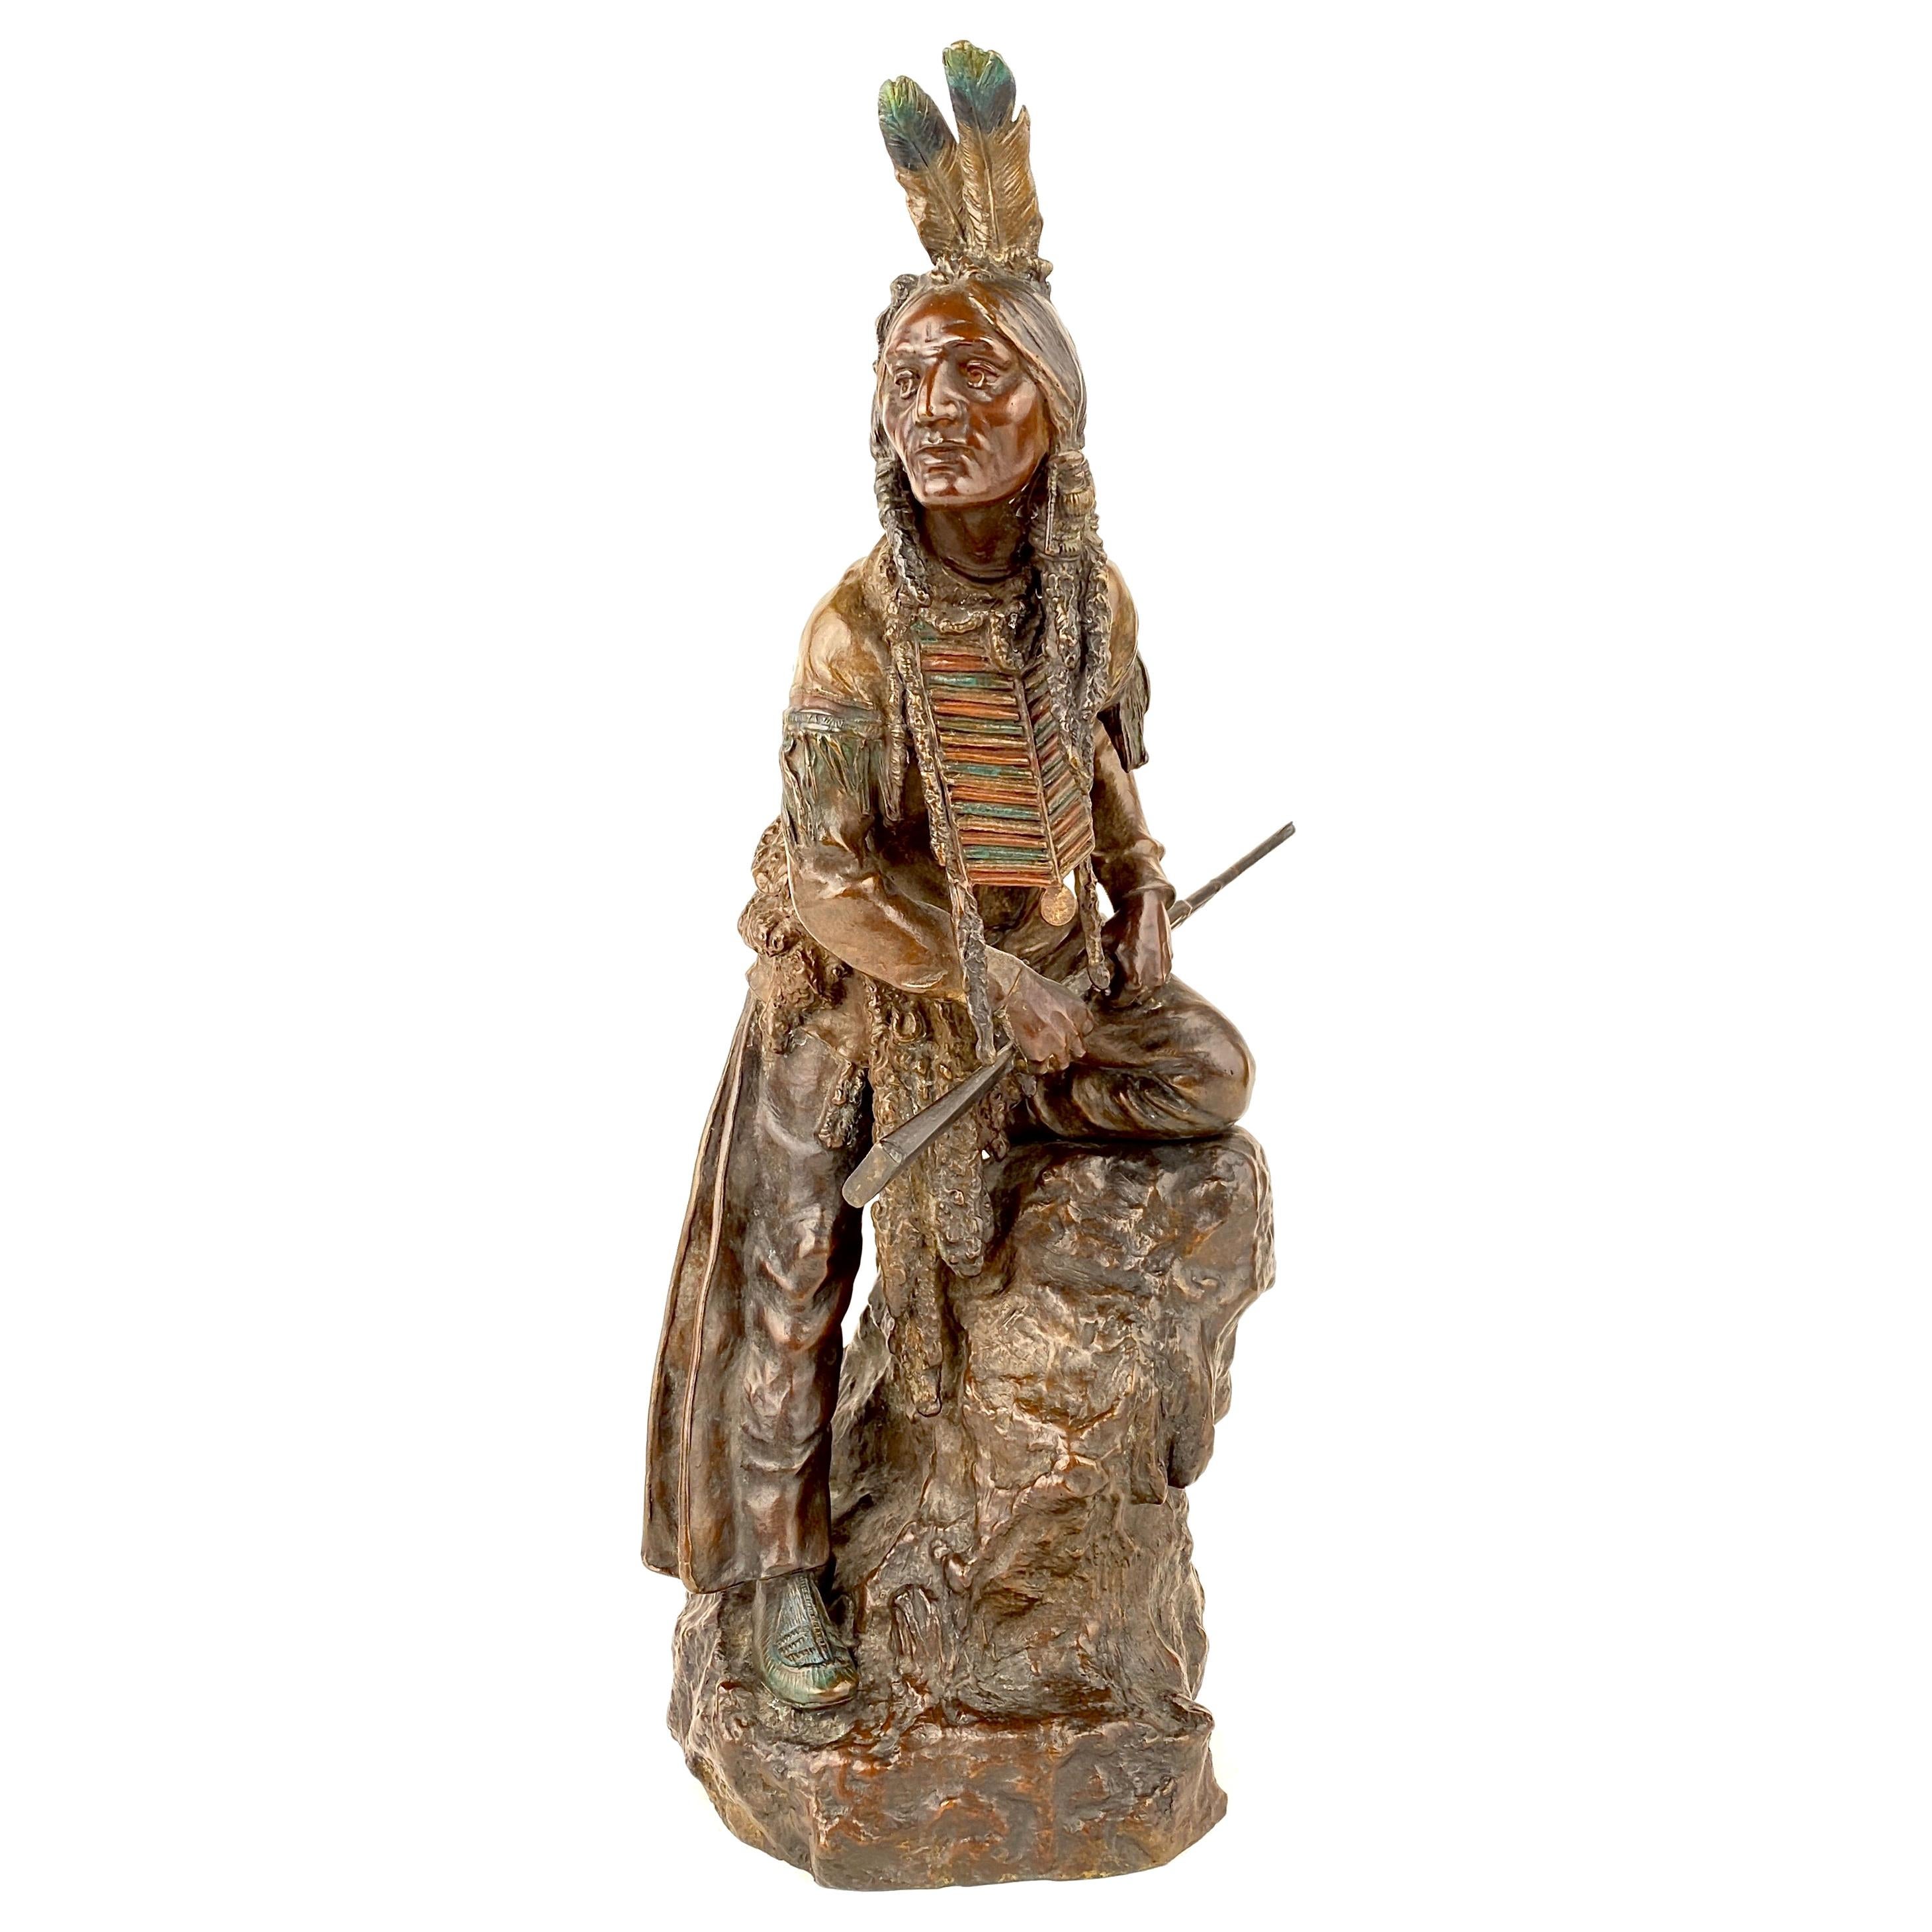 Austrian Art Nouveau American Indian Bronze “The Scout” by, Carl Kauba